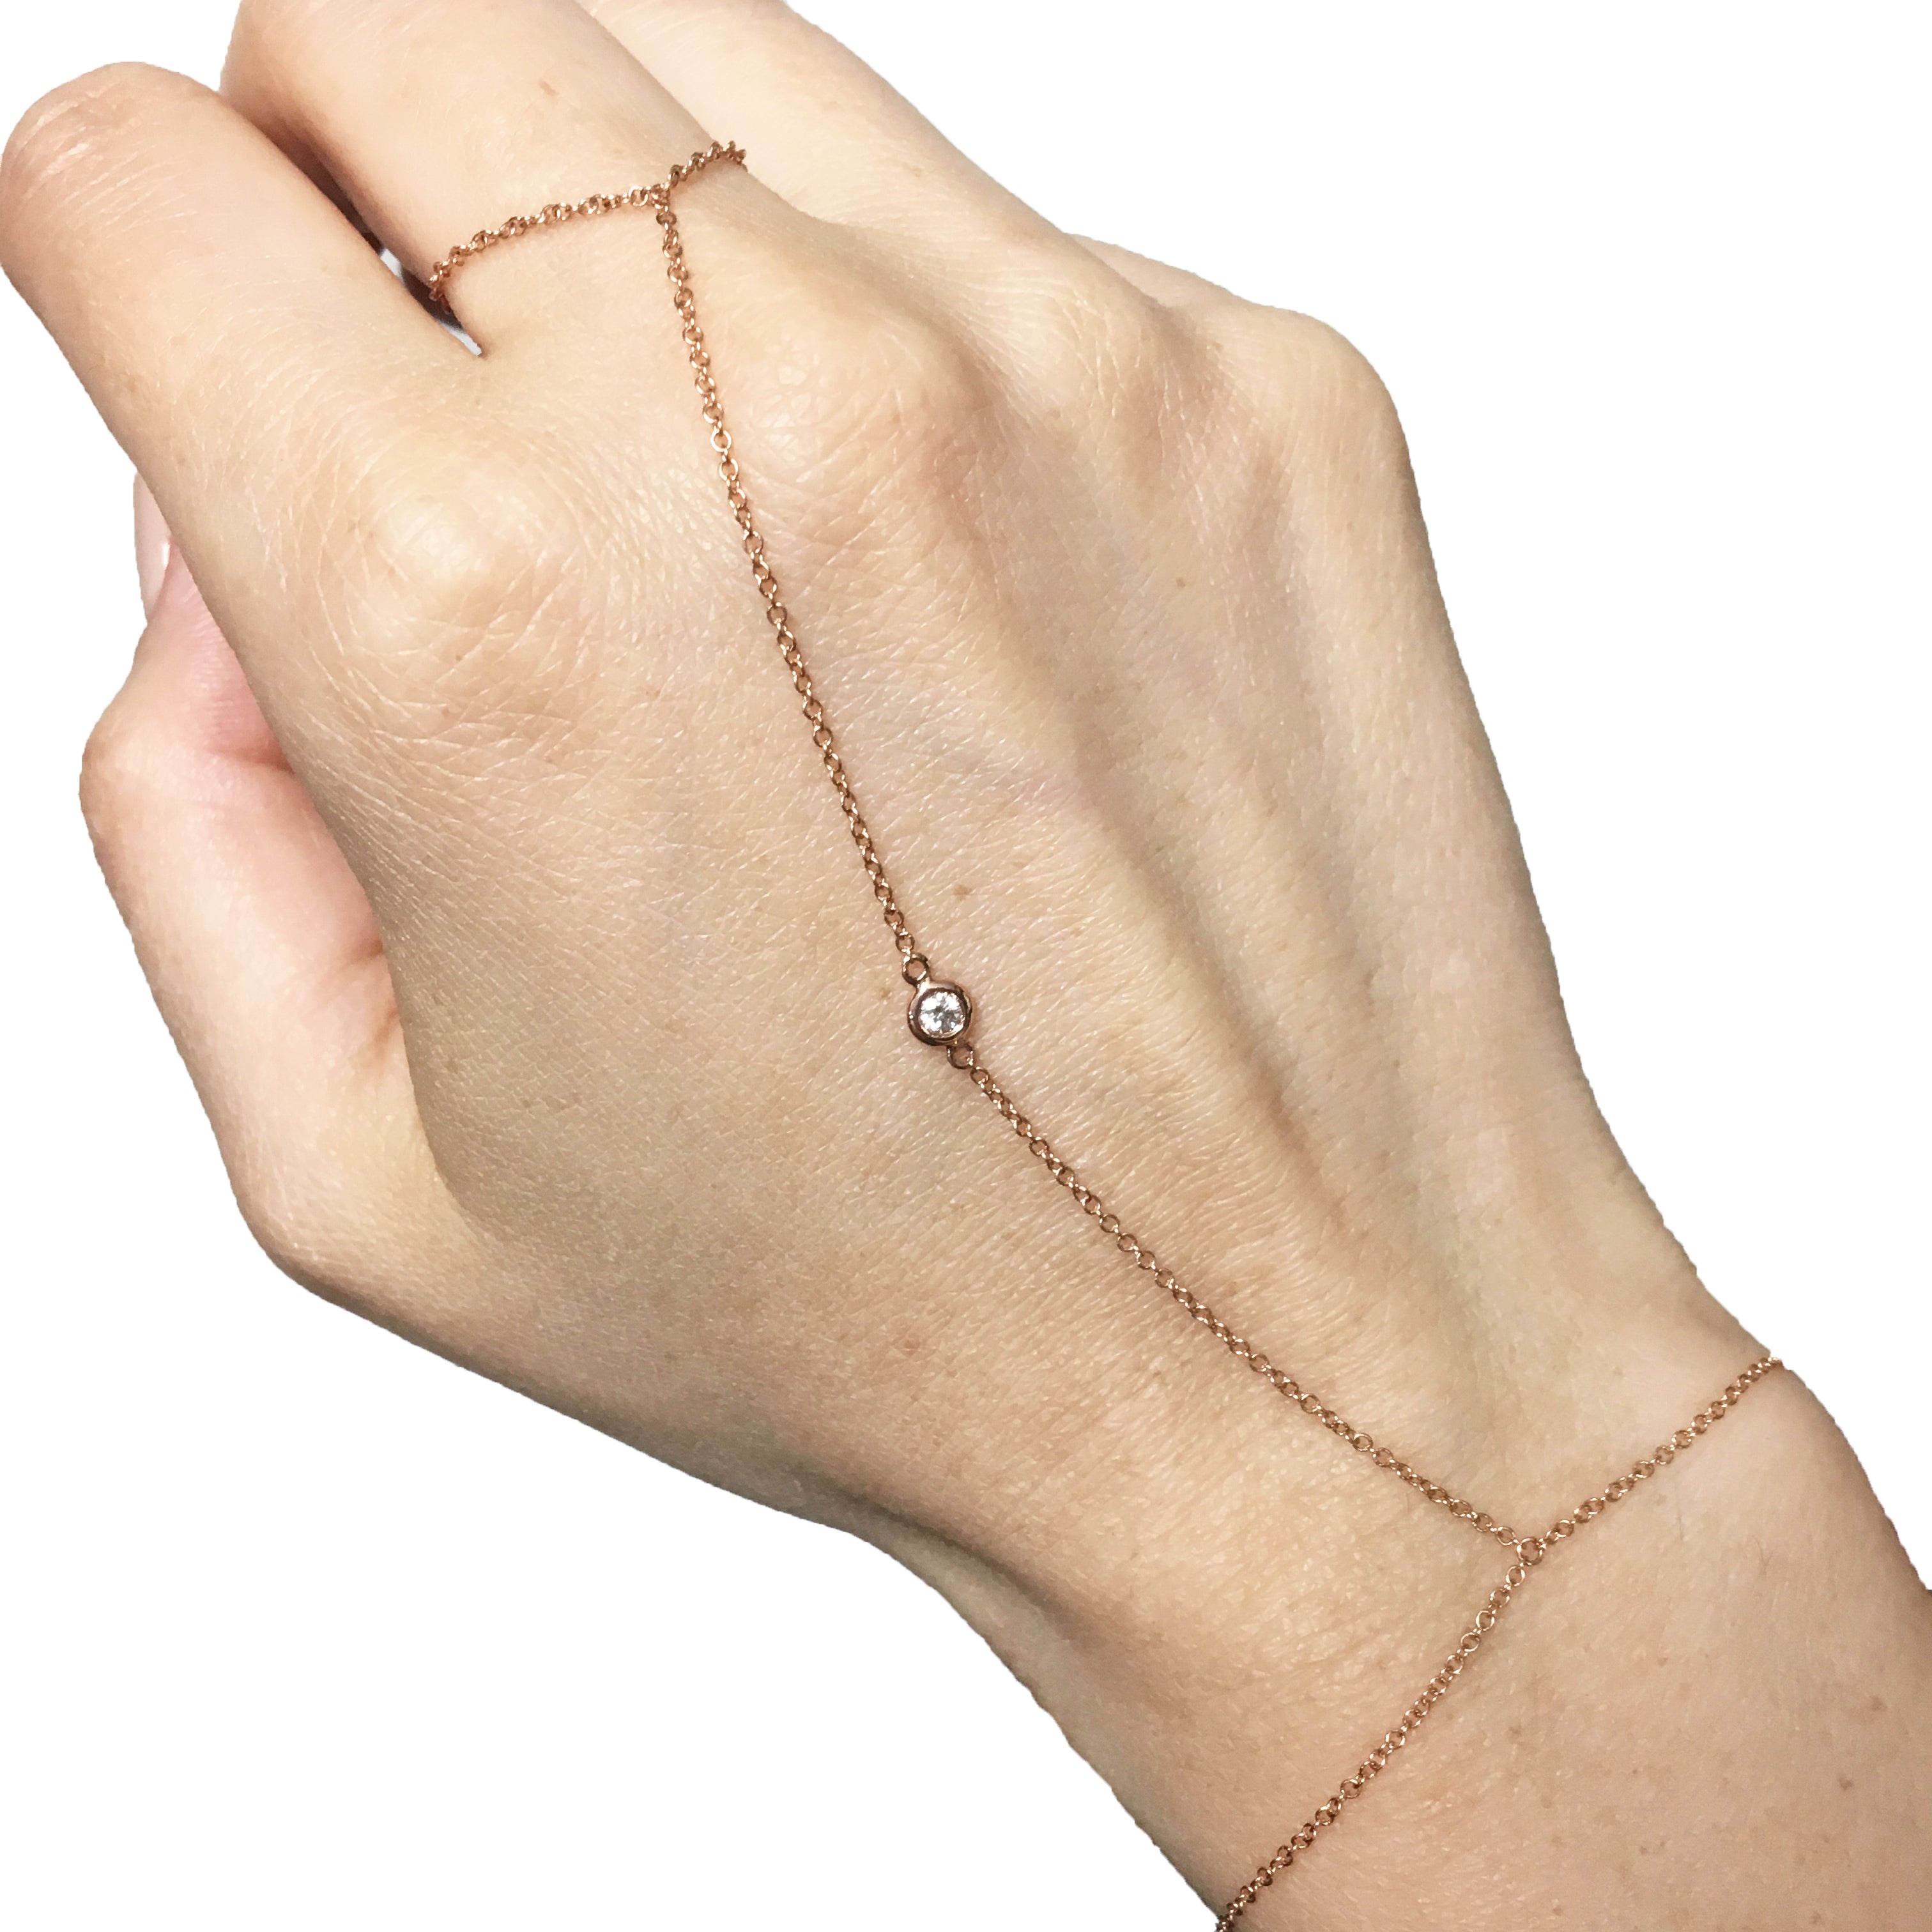 Buy Jalaja Single Lotus Ring Hand chain Bracelet | Tarinika